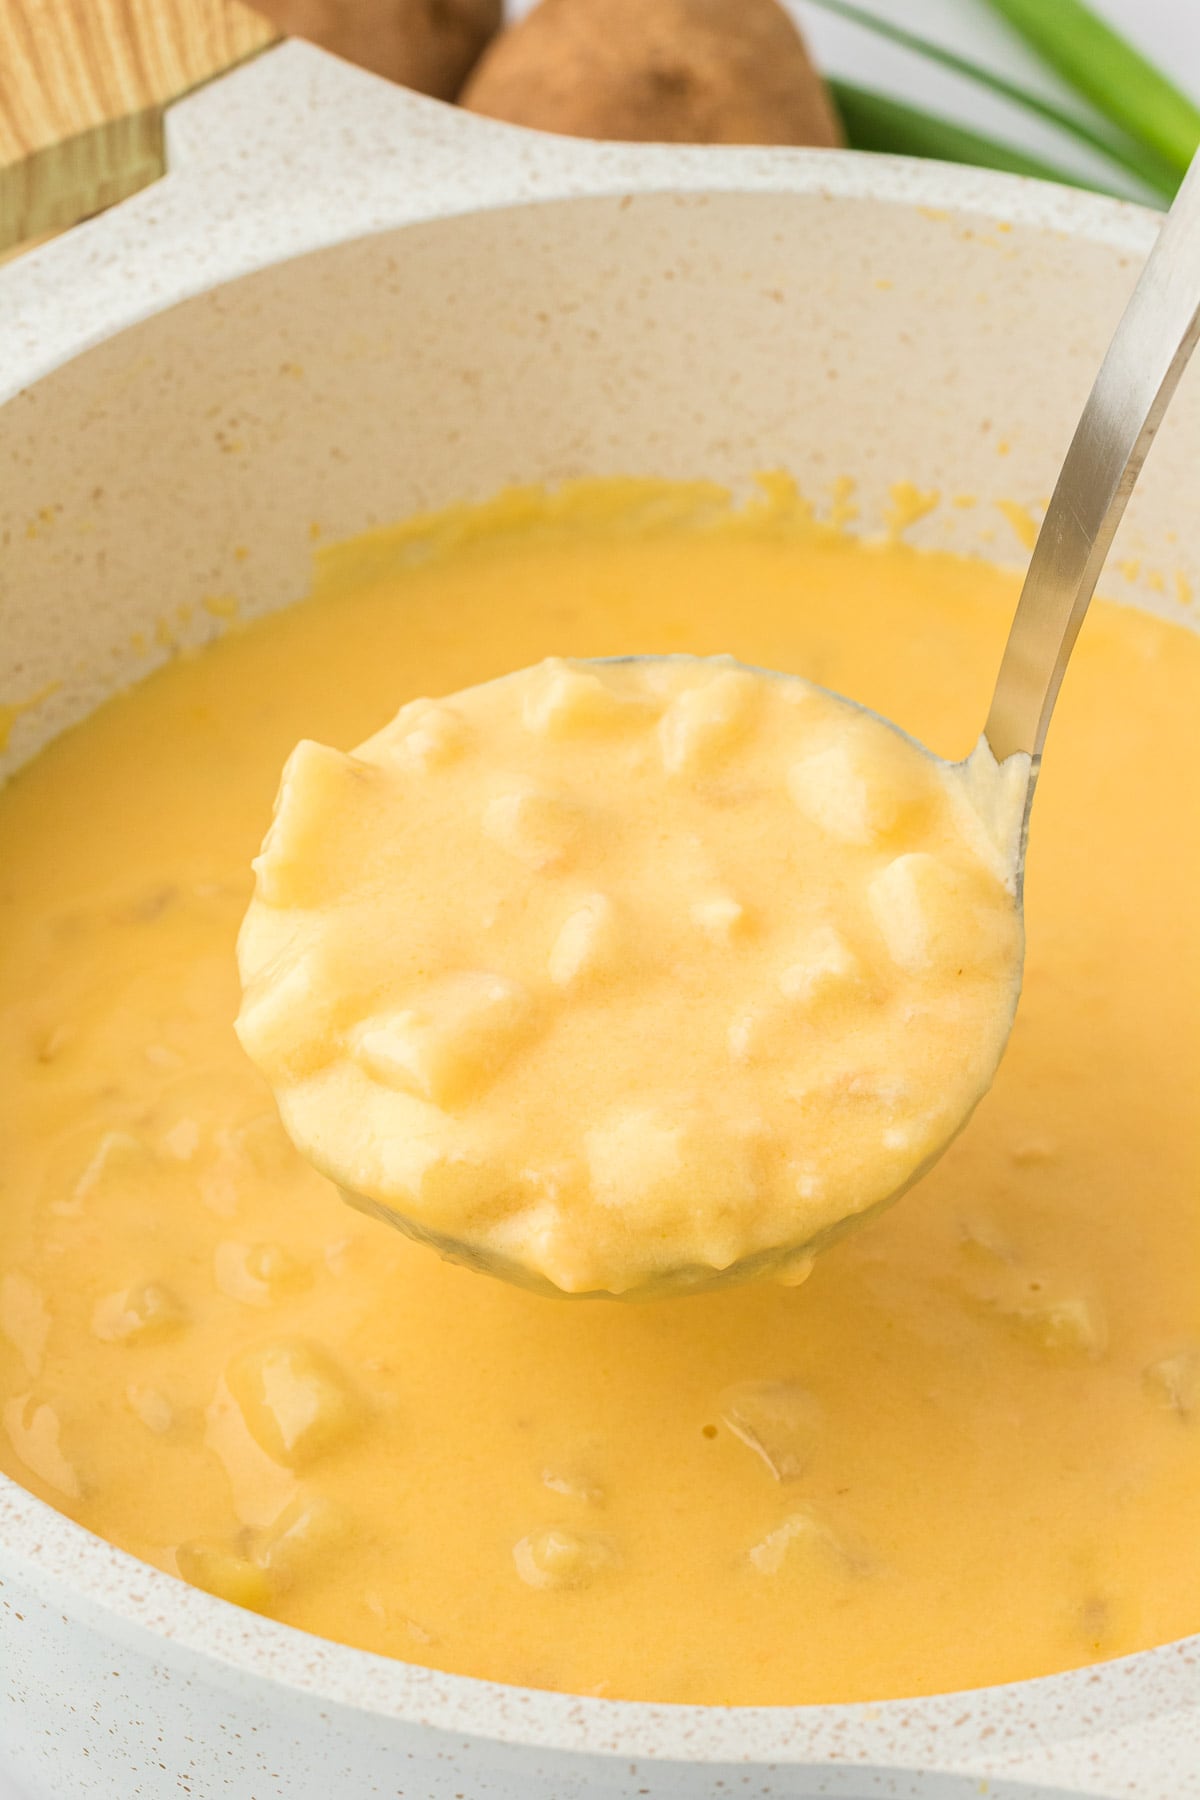 ladle full of potato soup